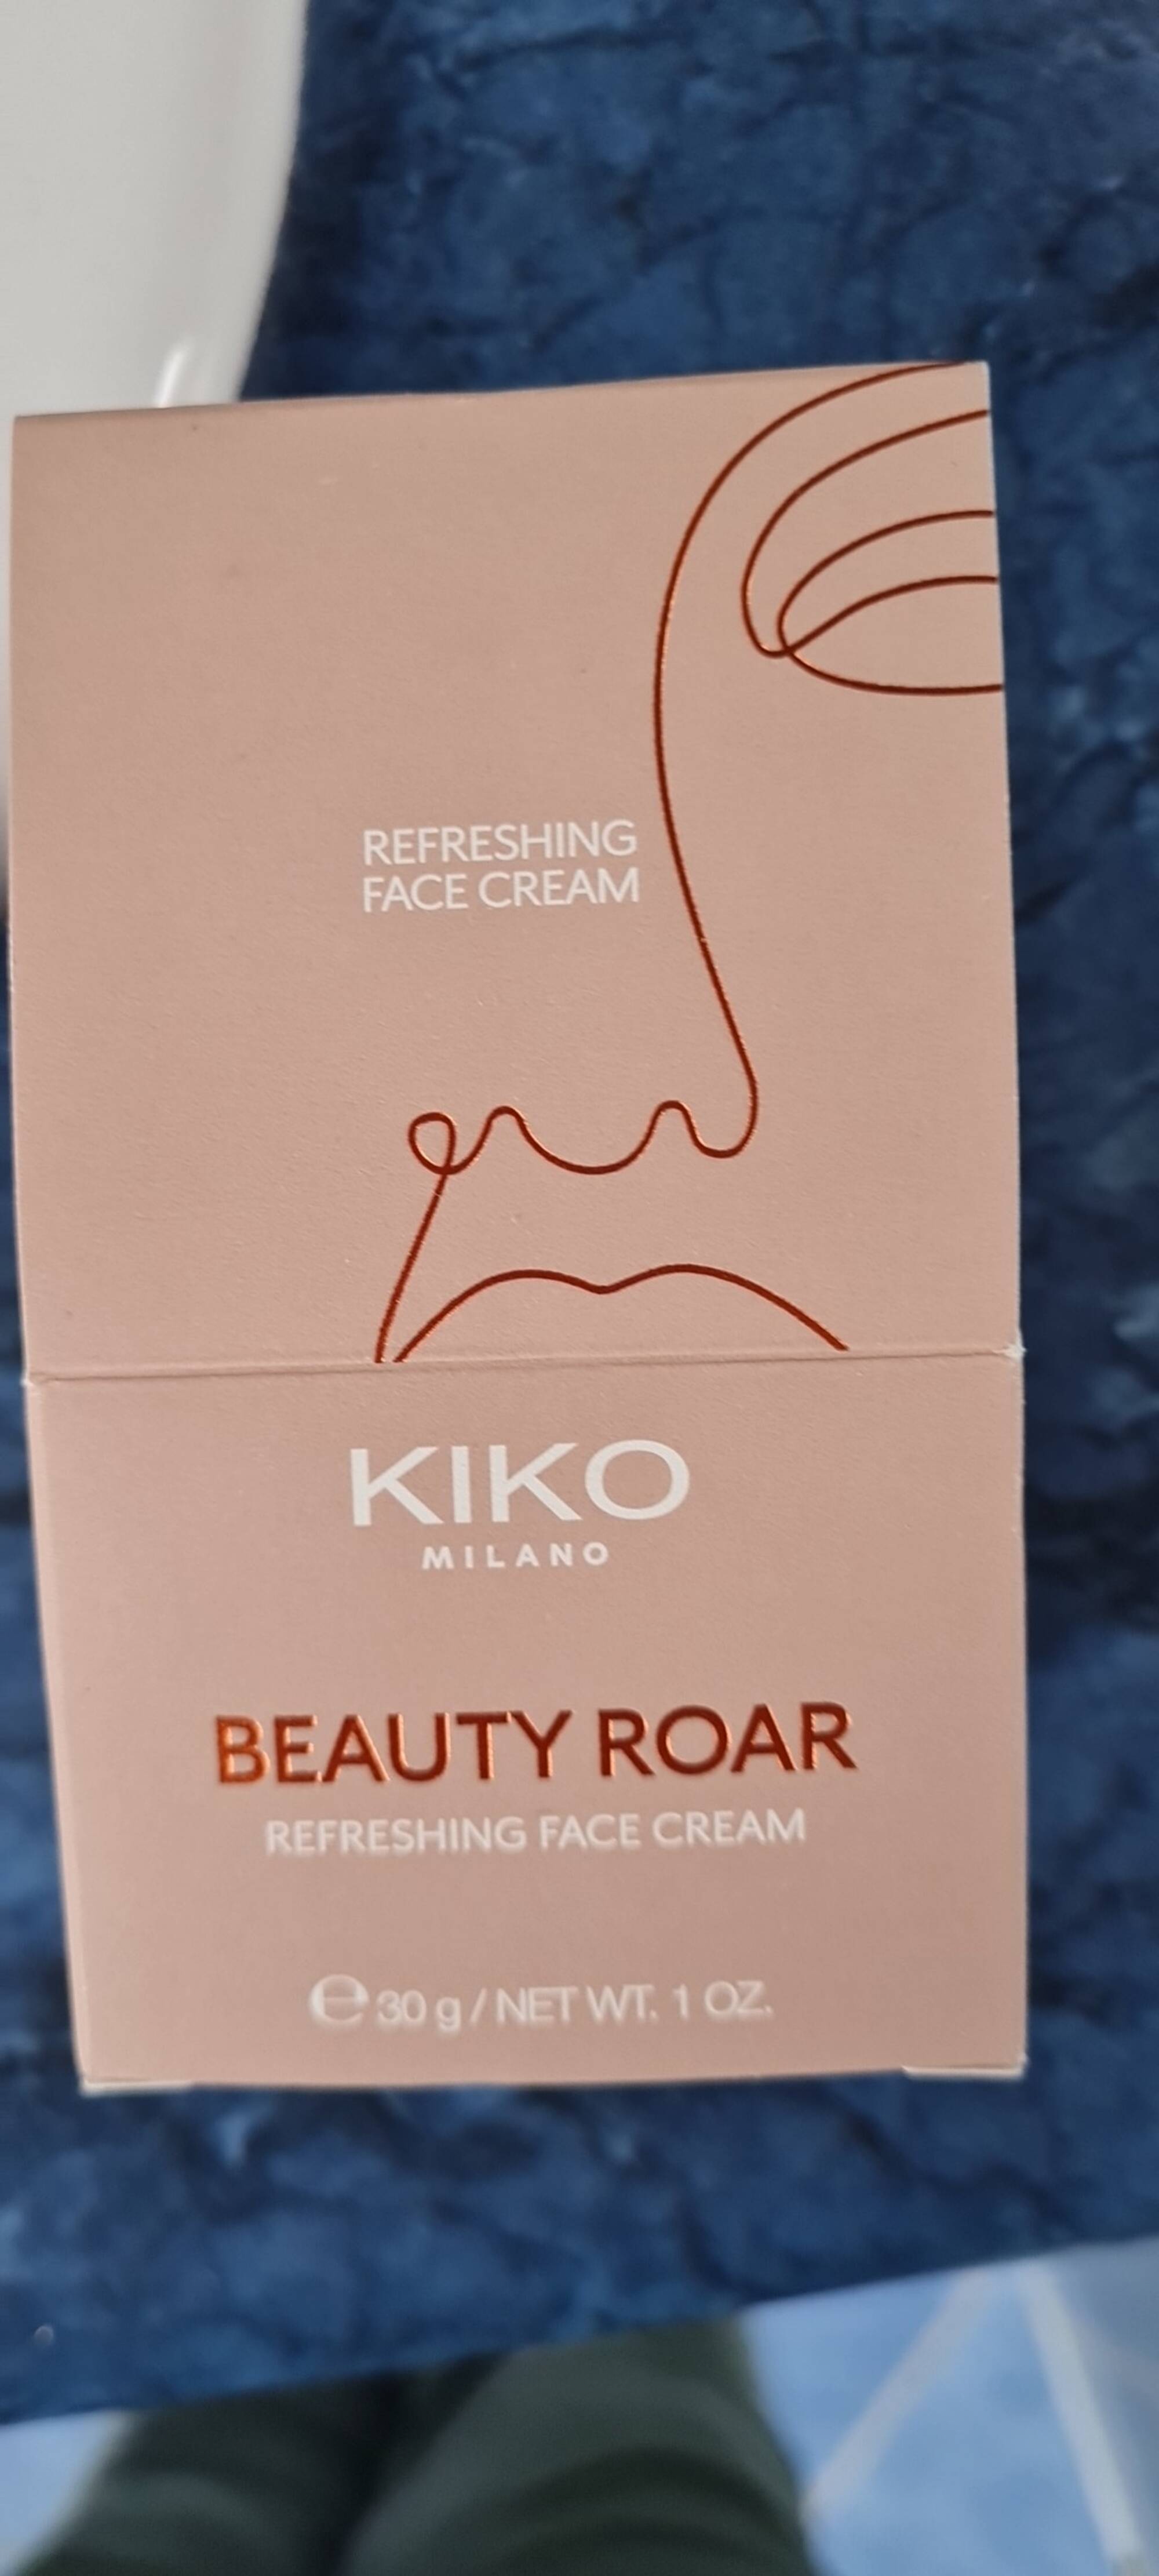 KIKO - Beauty roar - Refreshing face cream